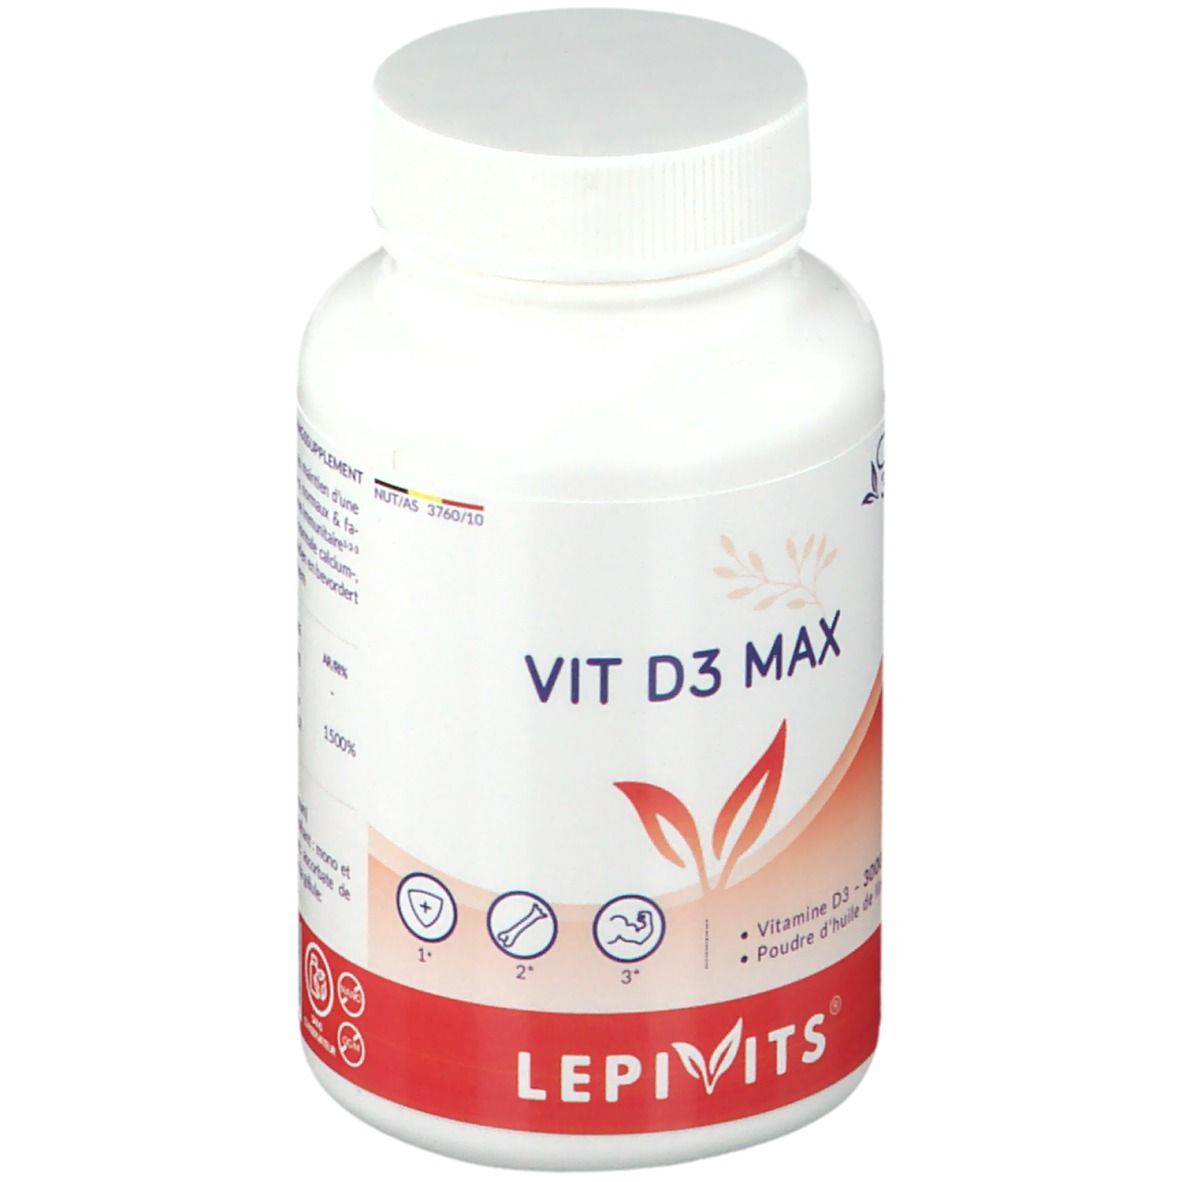 Lepivits® Vit D3 Max